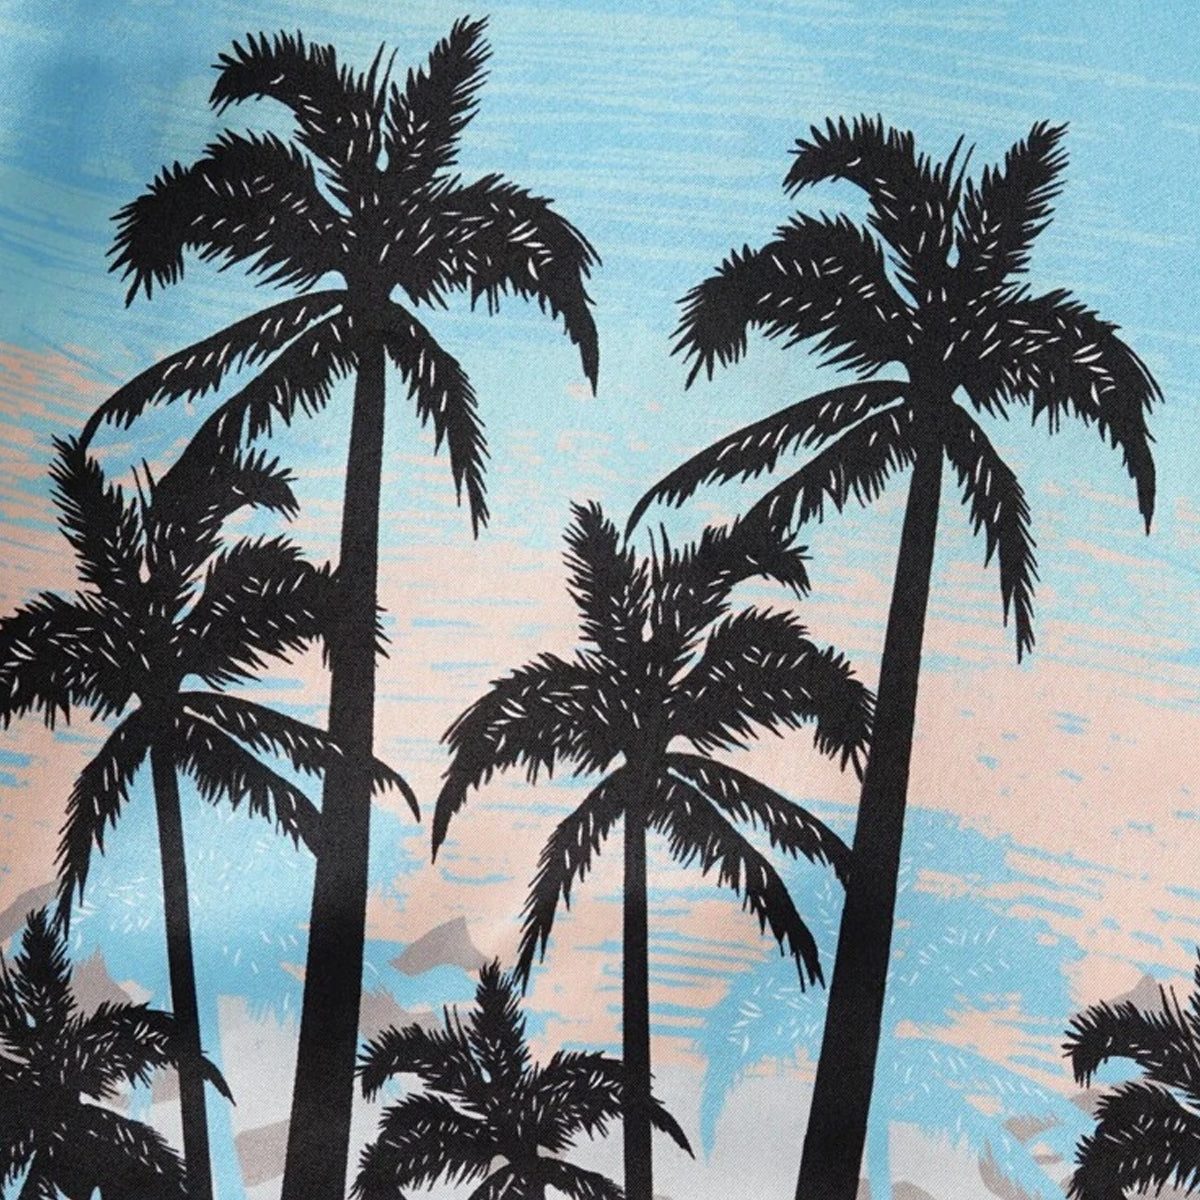 Venutaloza Tropical Casual Tree Button Front Beach Short Sleeve Shirt For Boys.